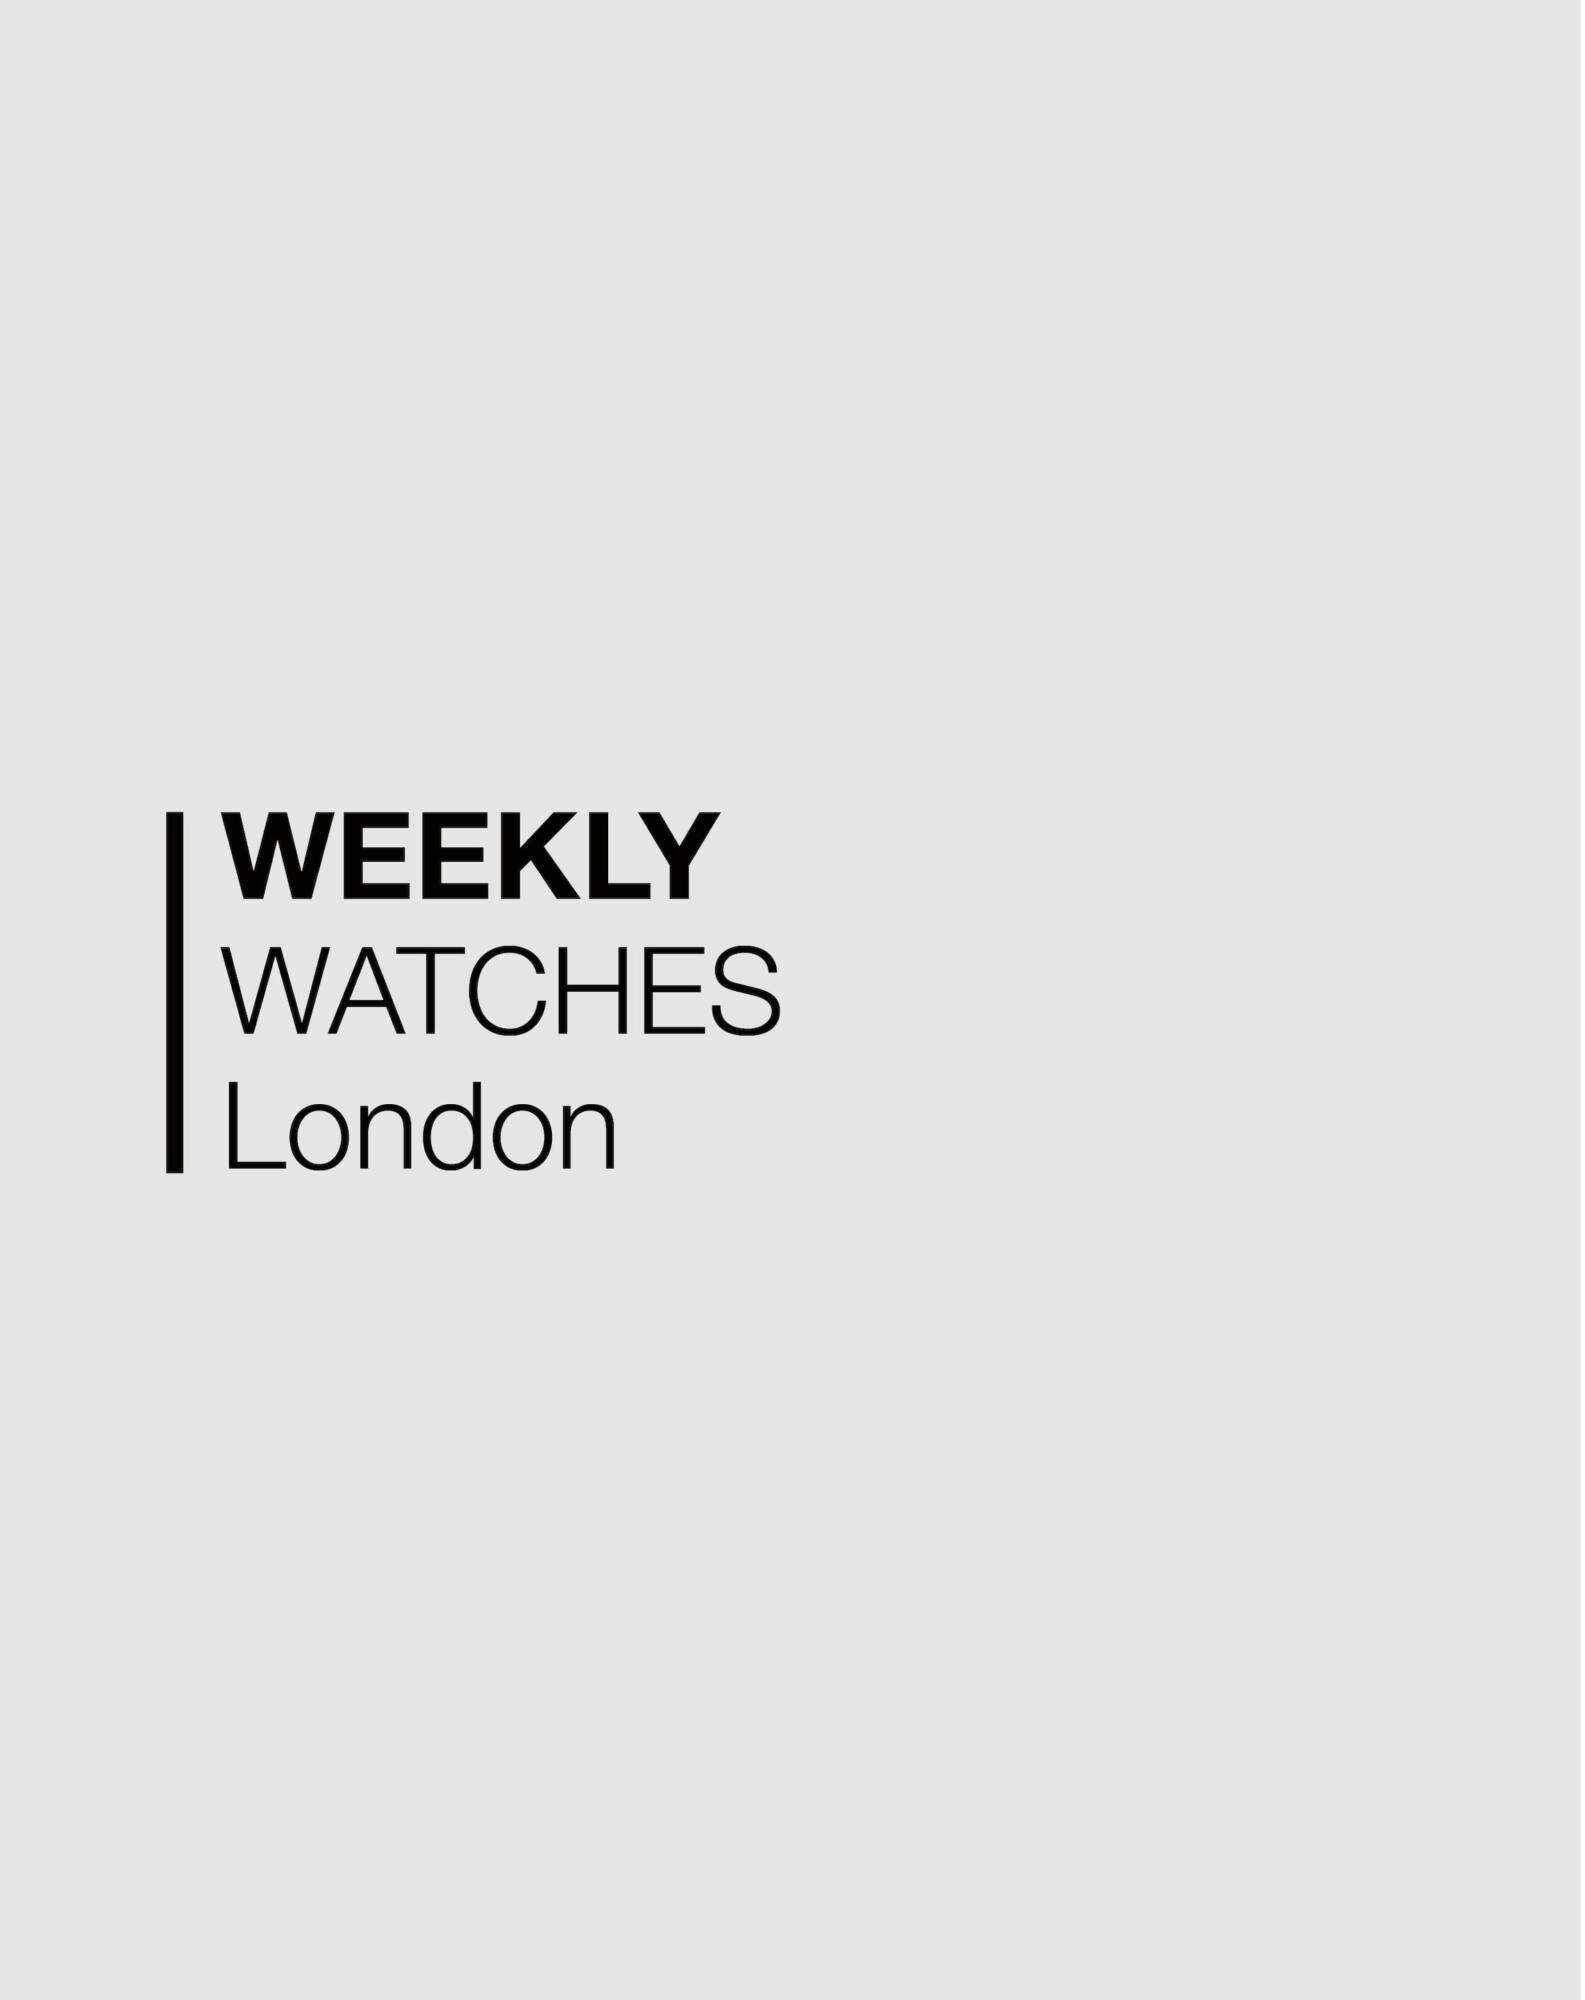 “Weekly Watches London” Online Auction by Bonhams - MondaniWeb